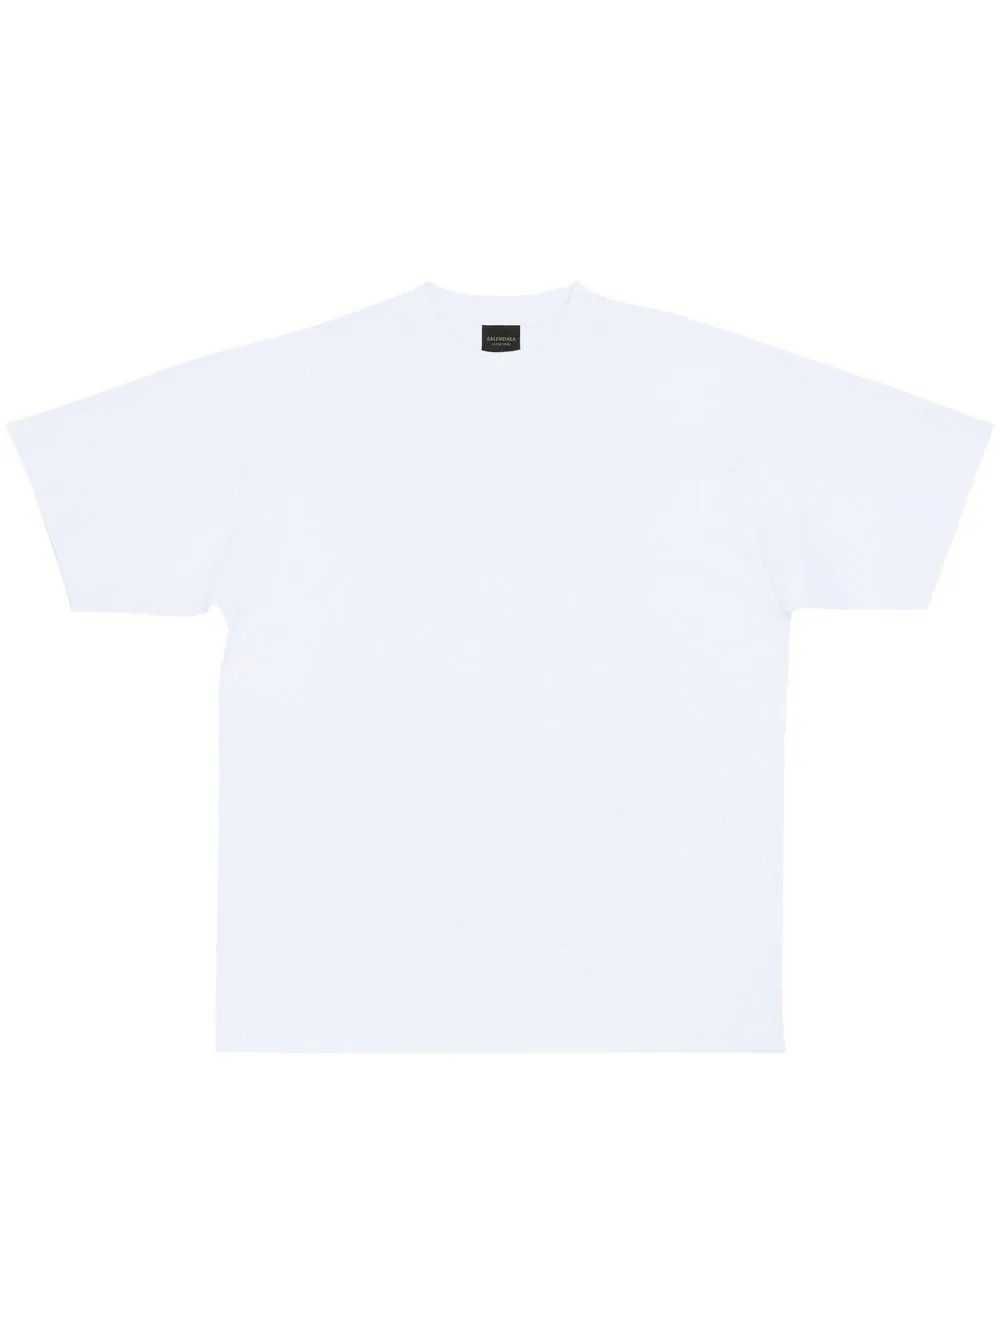 BALENCIAGA Garde-Robe Care Label Logo Oversized Тениска XS (M) и M (L)